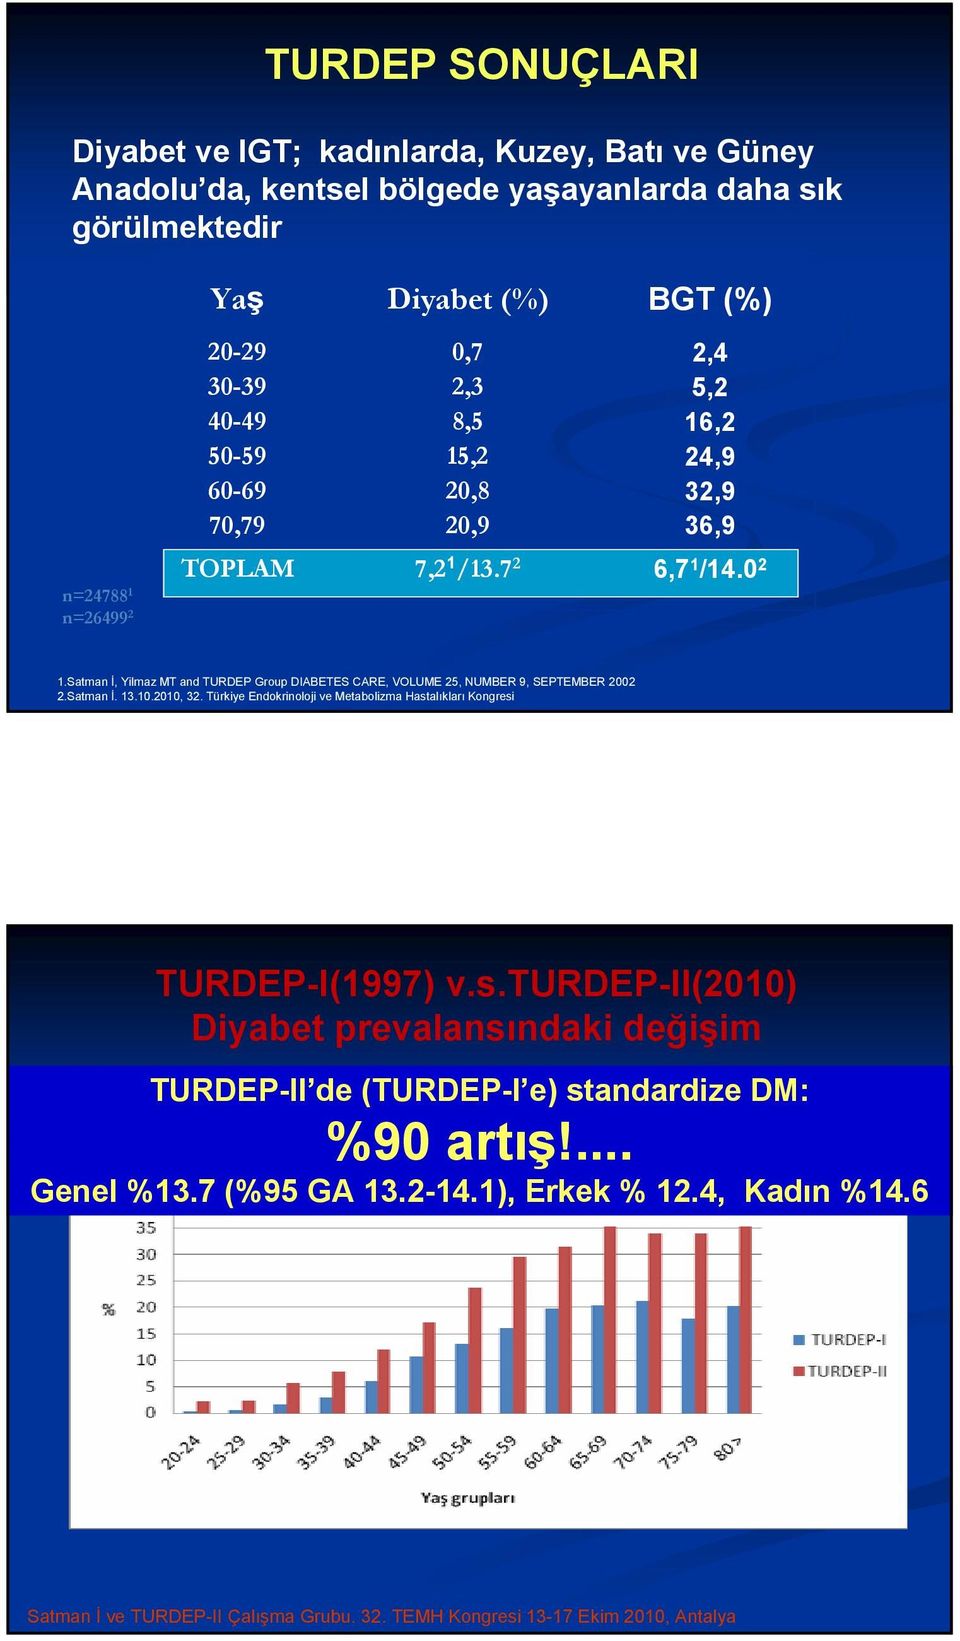 Satman İ, Yilmaz MT and TURDEP Group DIABETES CARE, VOLUME 25, NUMBER 9, SEPTEMBER 22 2.Satman İ. 13.1.21, 32.